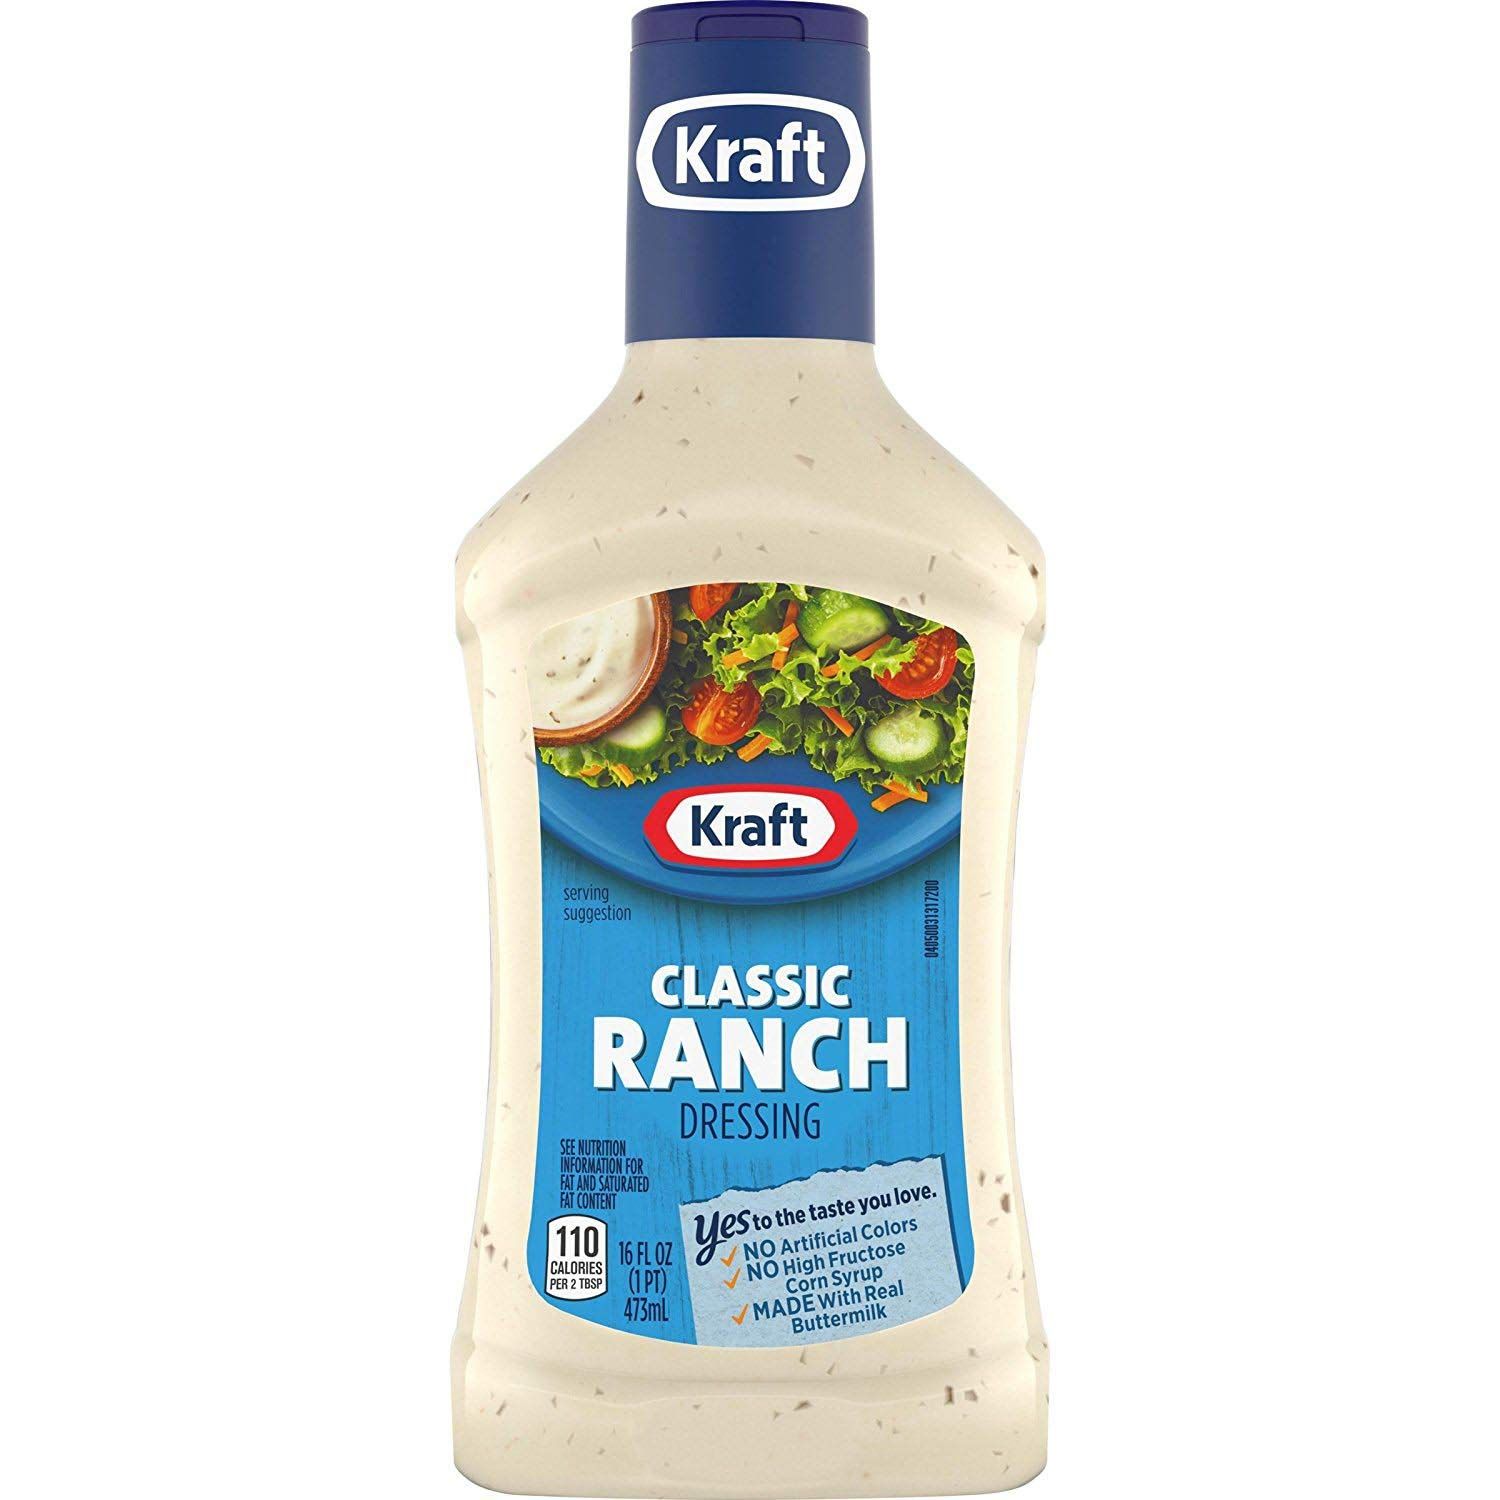 Kraft Classic Ranch Dressing Image